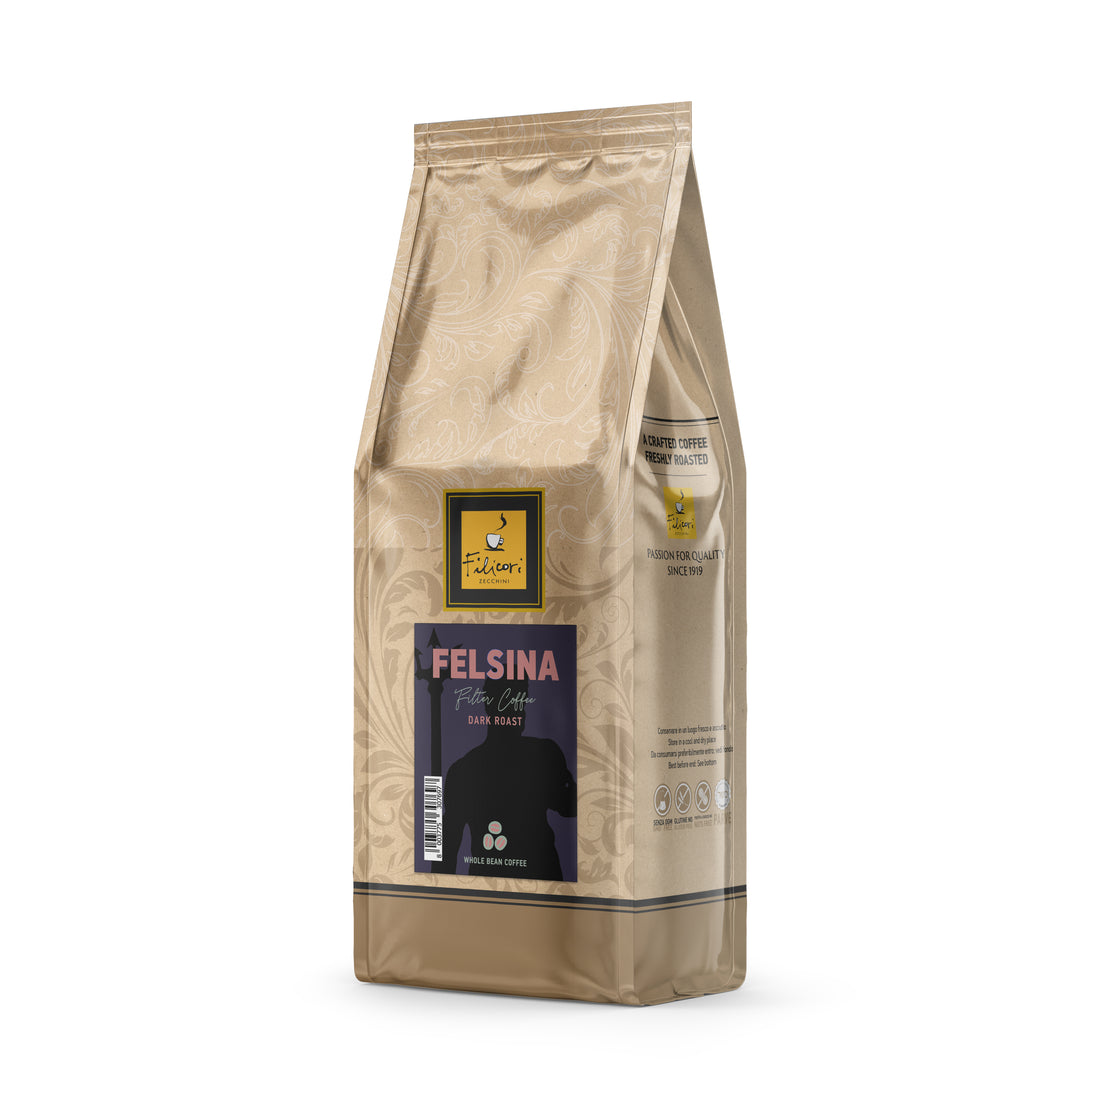 Filicori Zecchini Felsina Whole Bean Coffee